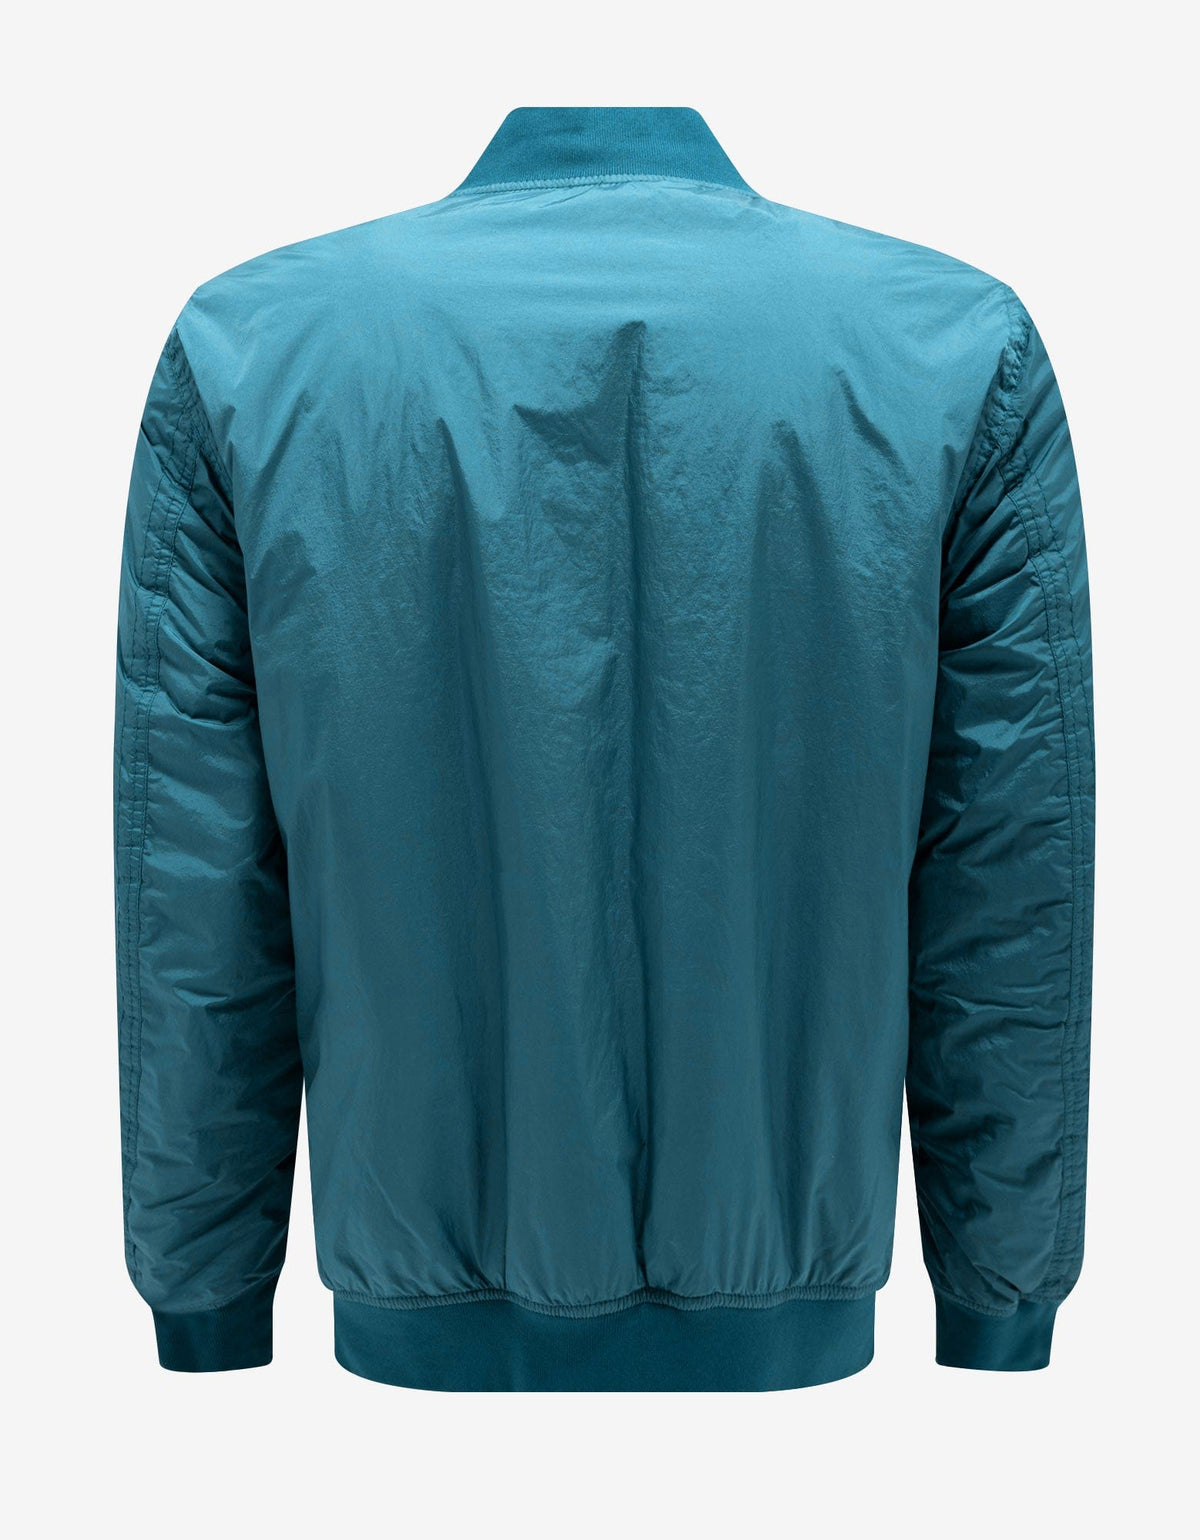 Stone Island Teal Garment Dyed Bomber Jacket